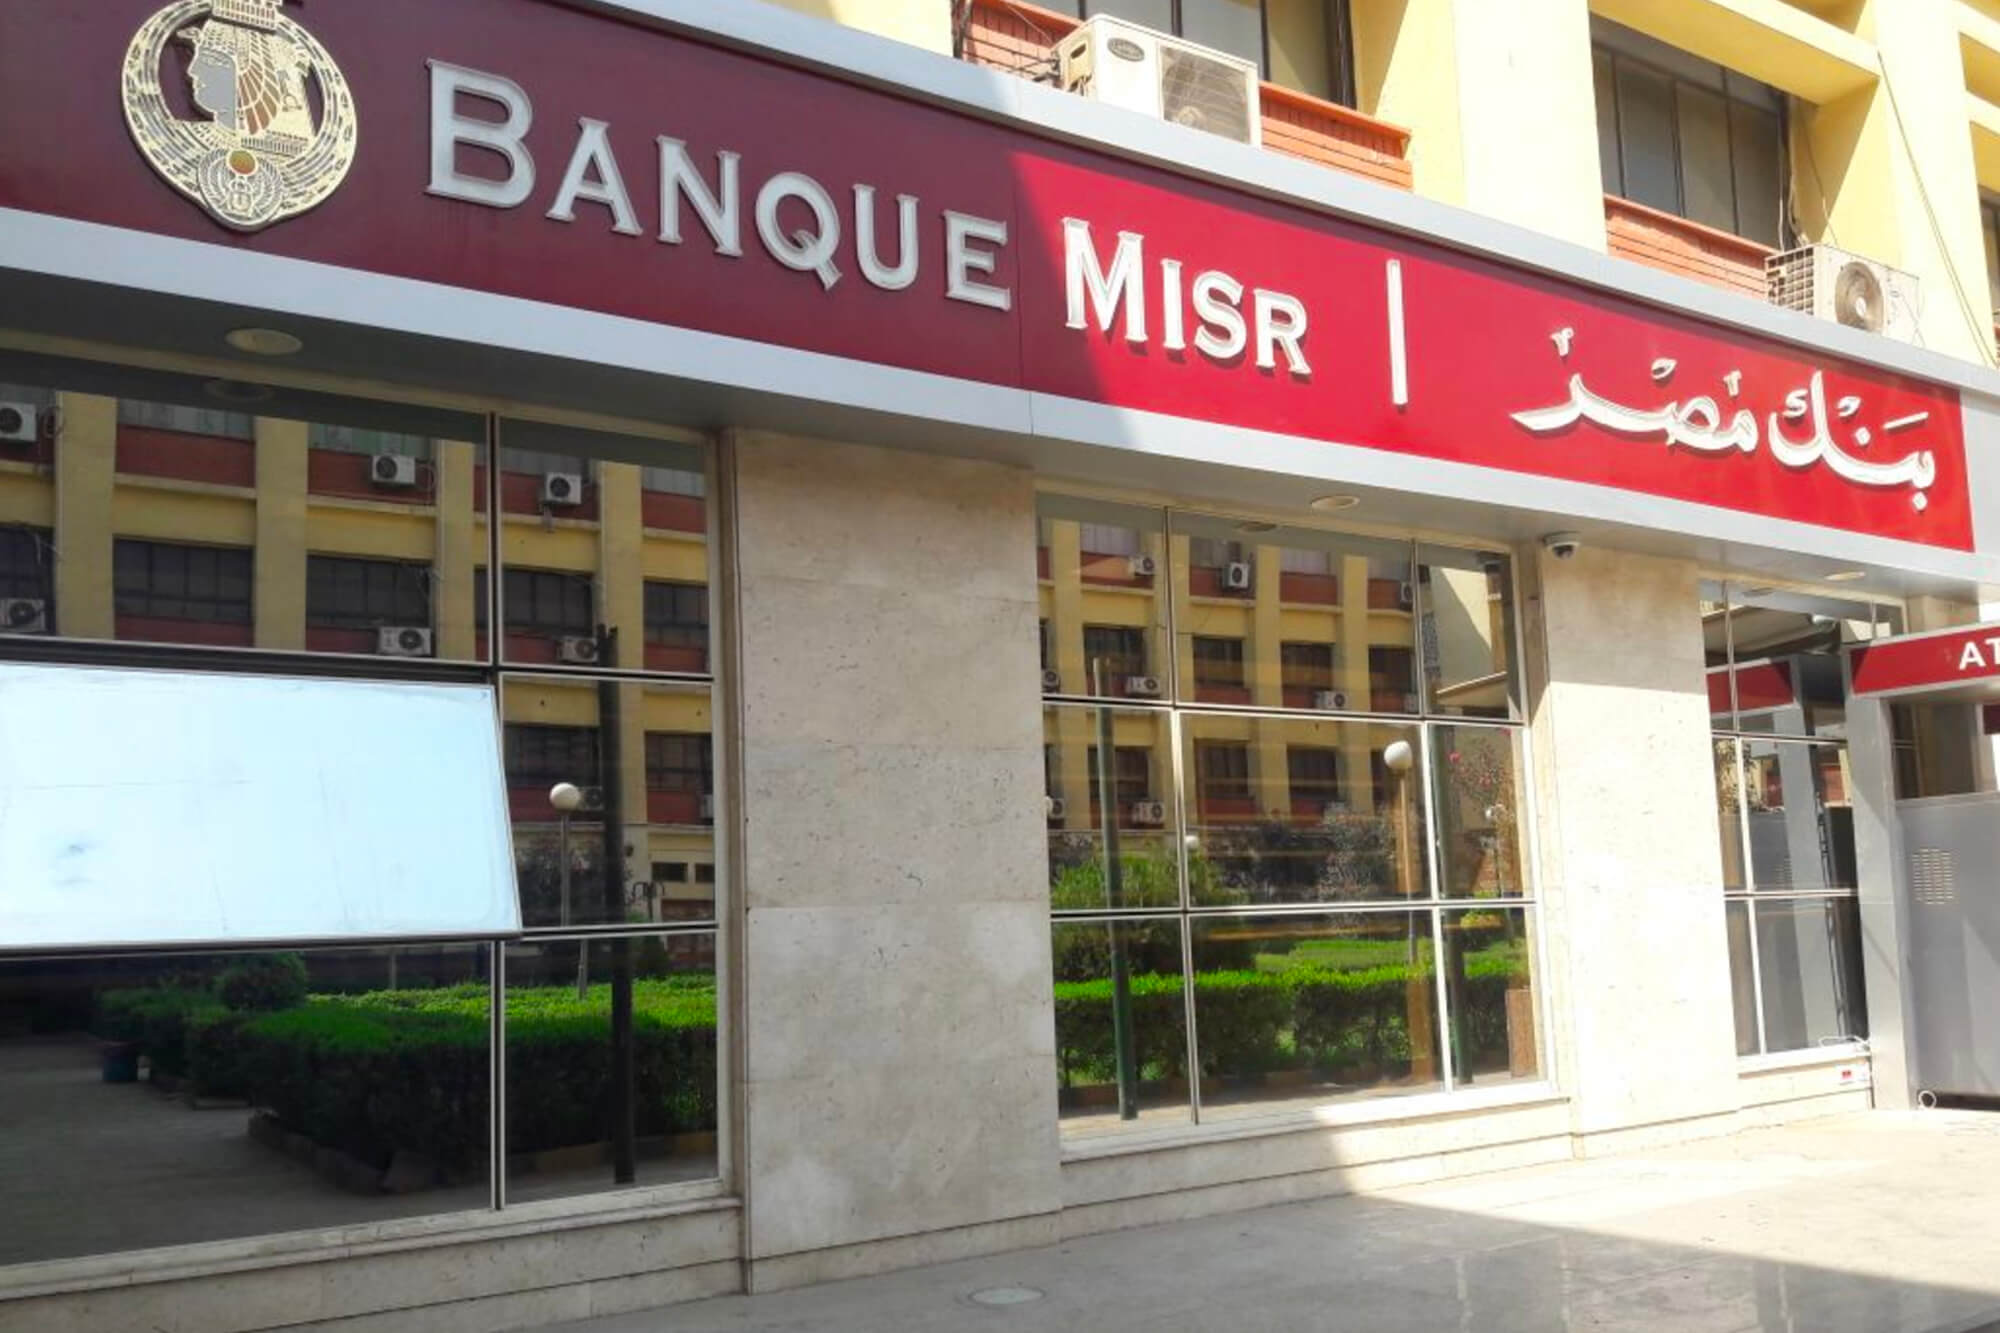 Bank misr. Миср банк. Misr банк Египет. Египет в банке. Banque Misr | p.o. Box 1502 |Deira | Dubai | UAE Страна.